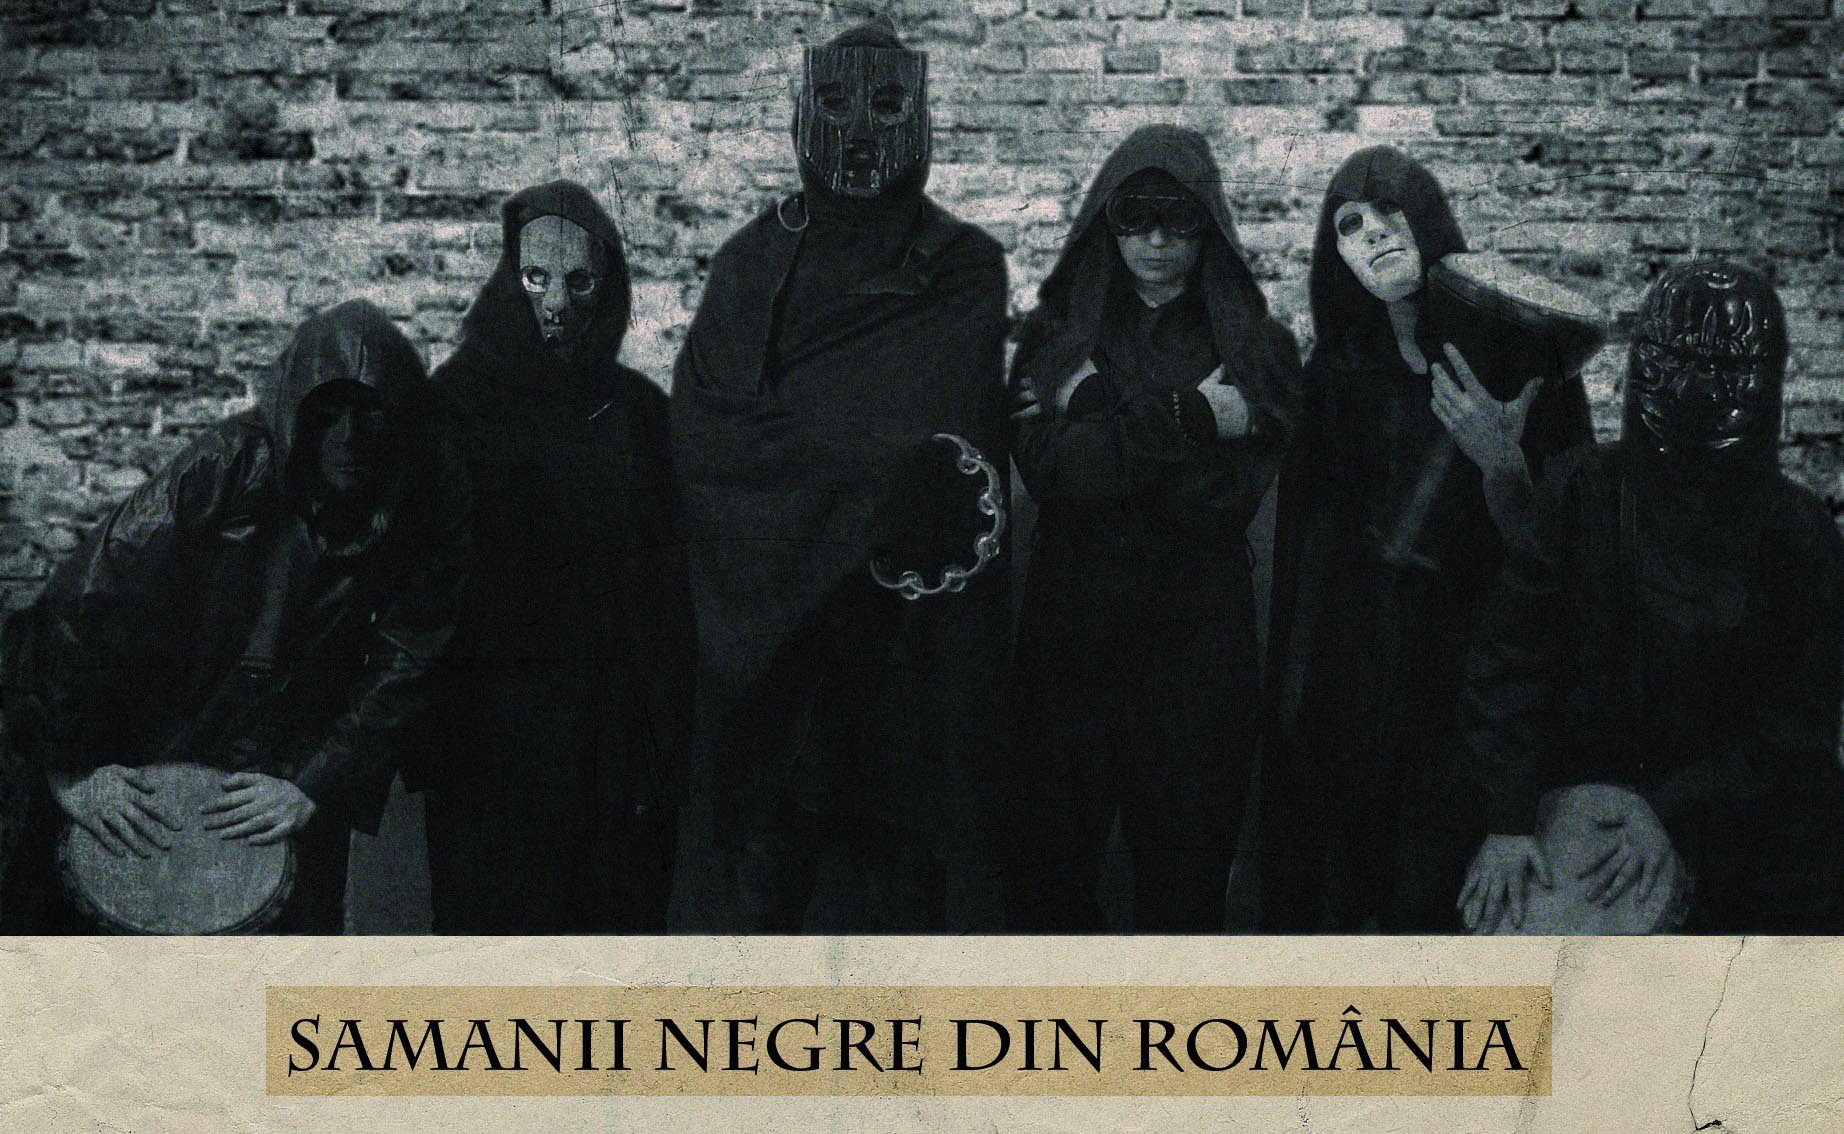 Samanii negru din România, Black shamans from Romania, Черные шаманы из Румынии